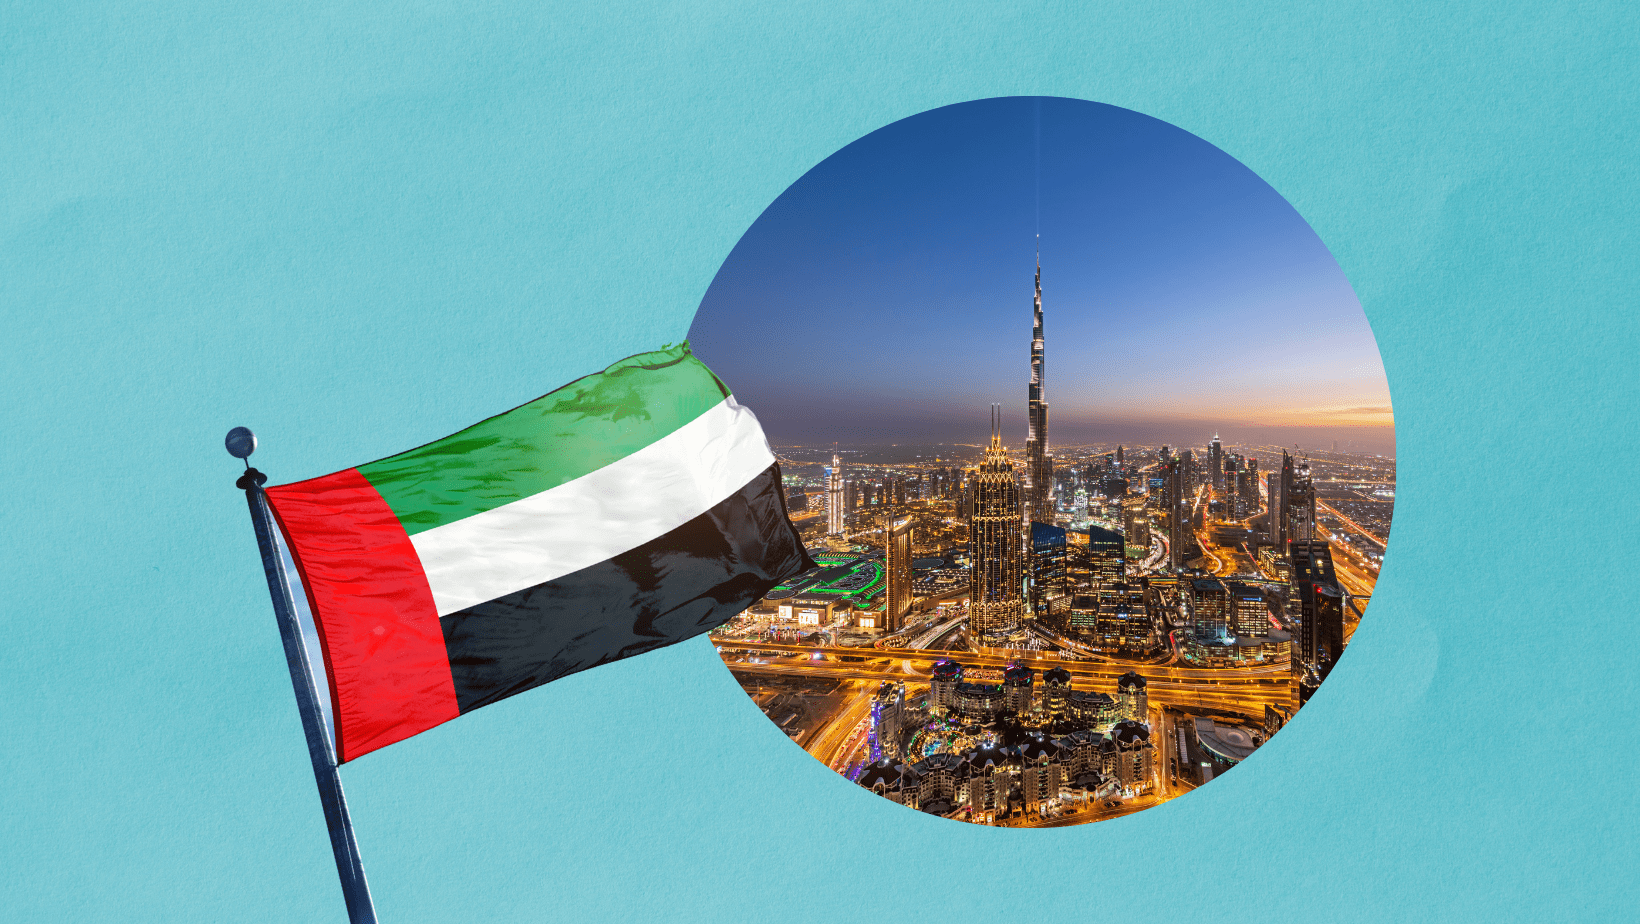 real estate investment in UAE